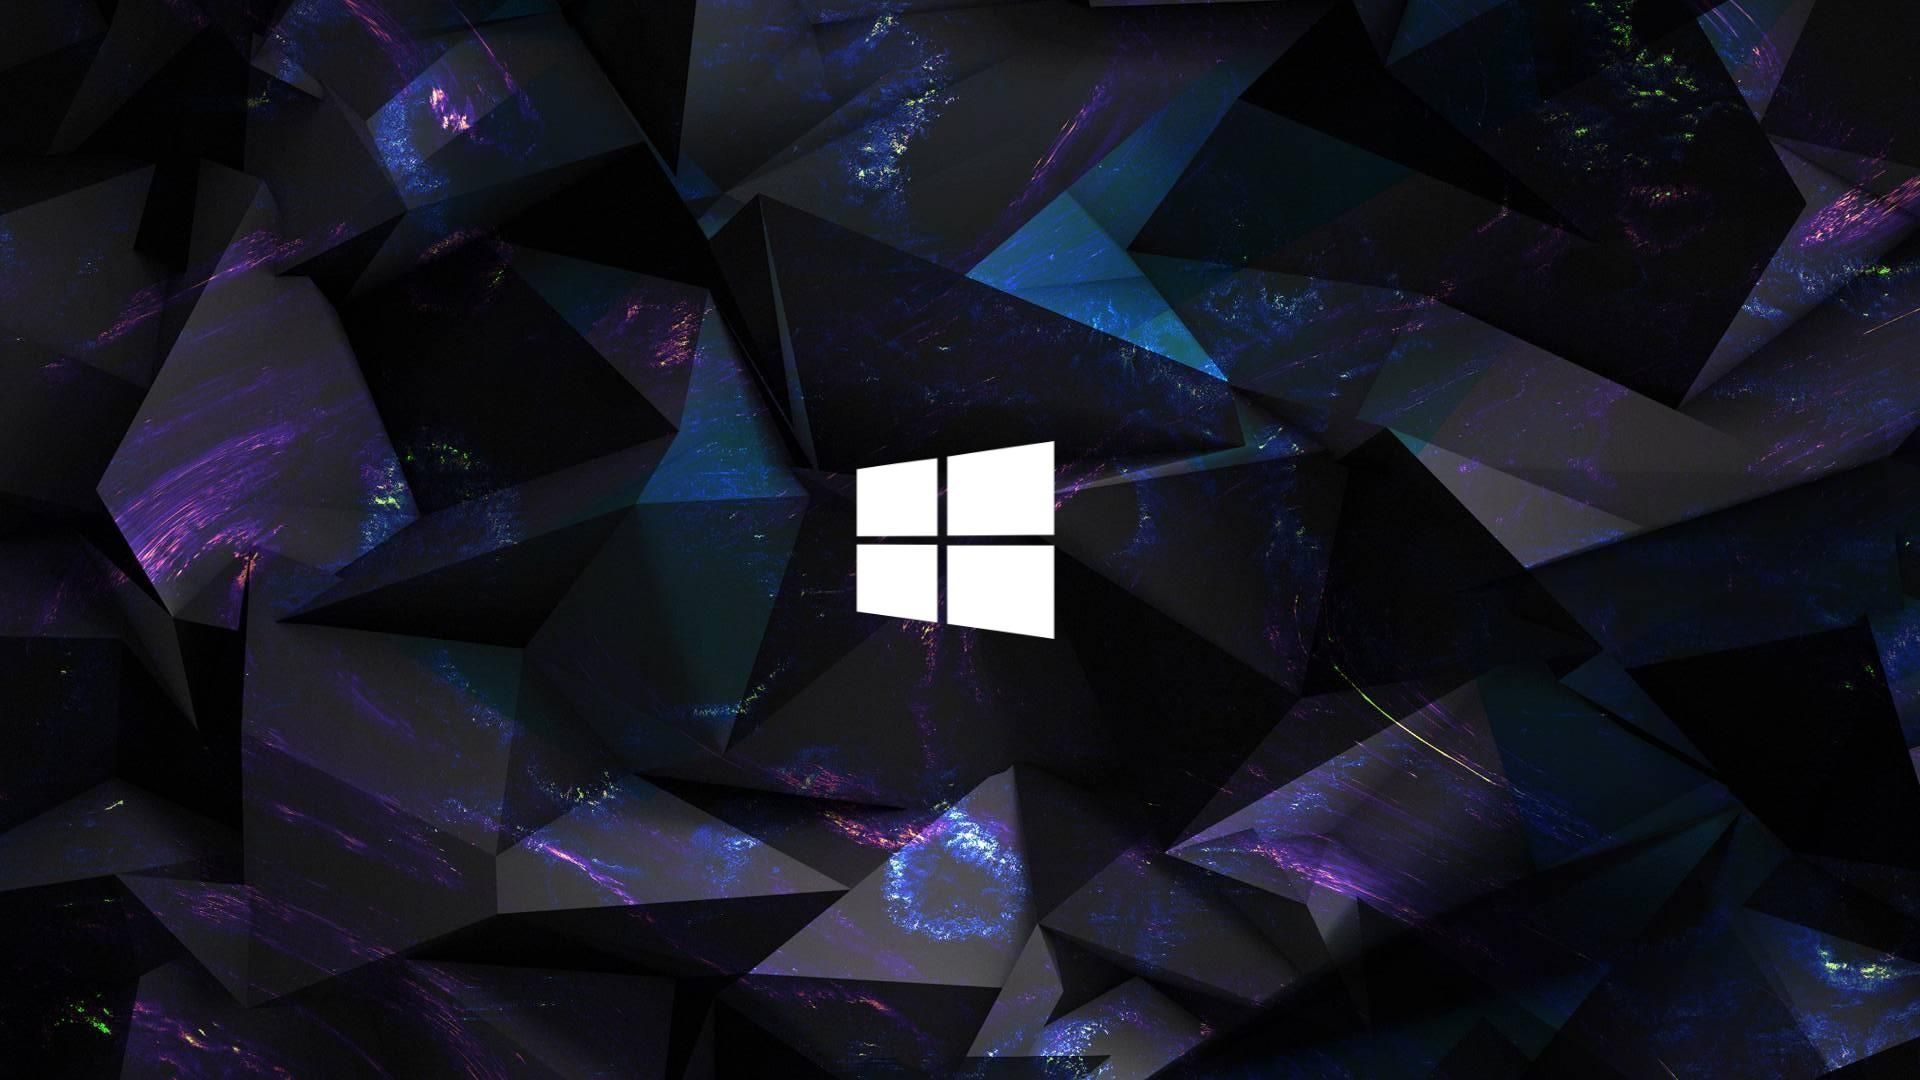  Windows 10 1920x1080 Hintergrundbild 1920x1080. Windows 10 #Hdwallpaper #wallpaper #image. Computer wallpaper hd, Wallpaper windows Laptop wallpaper